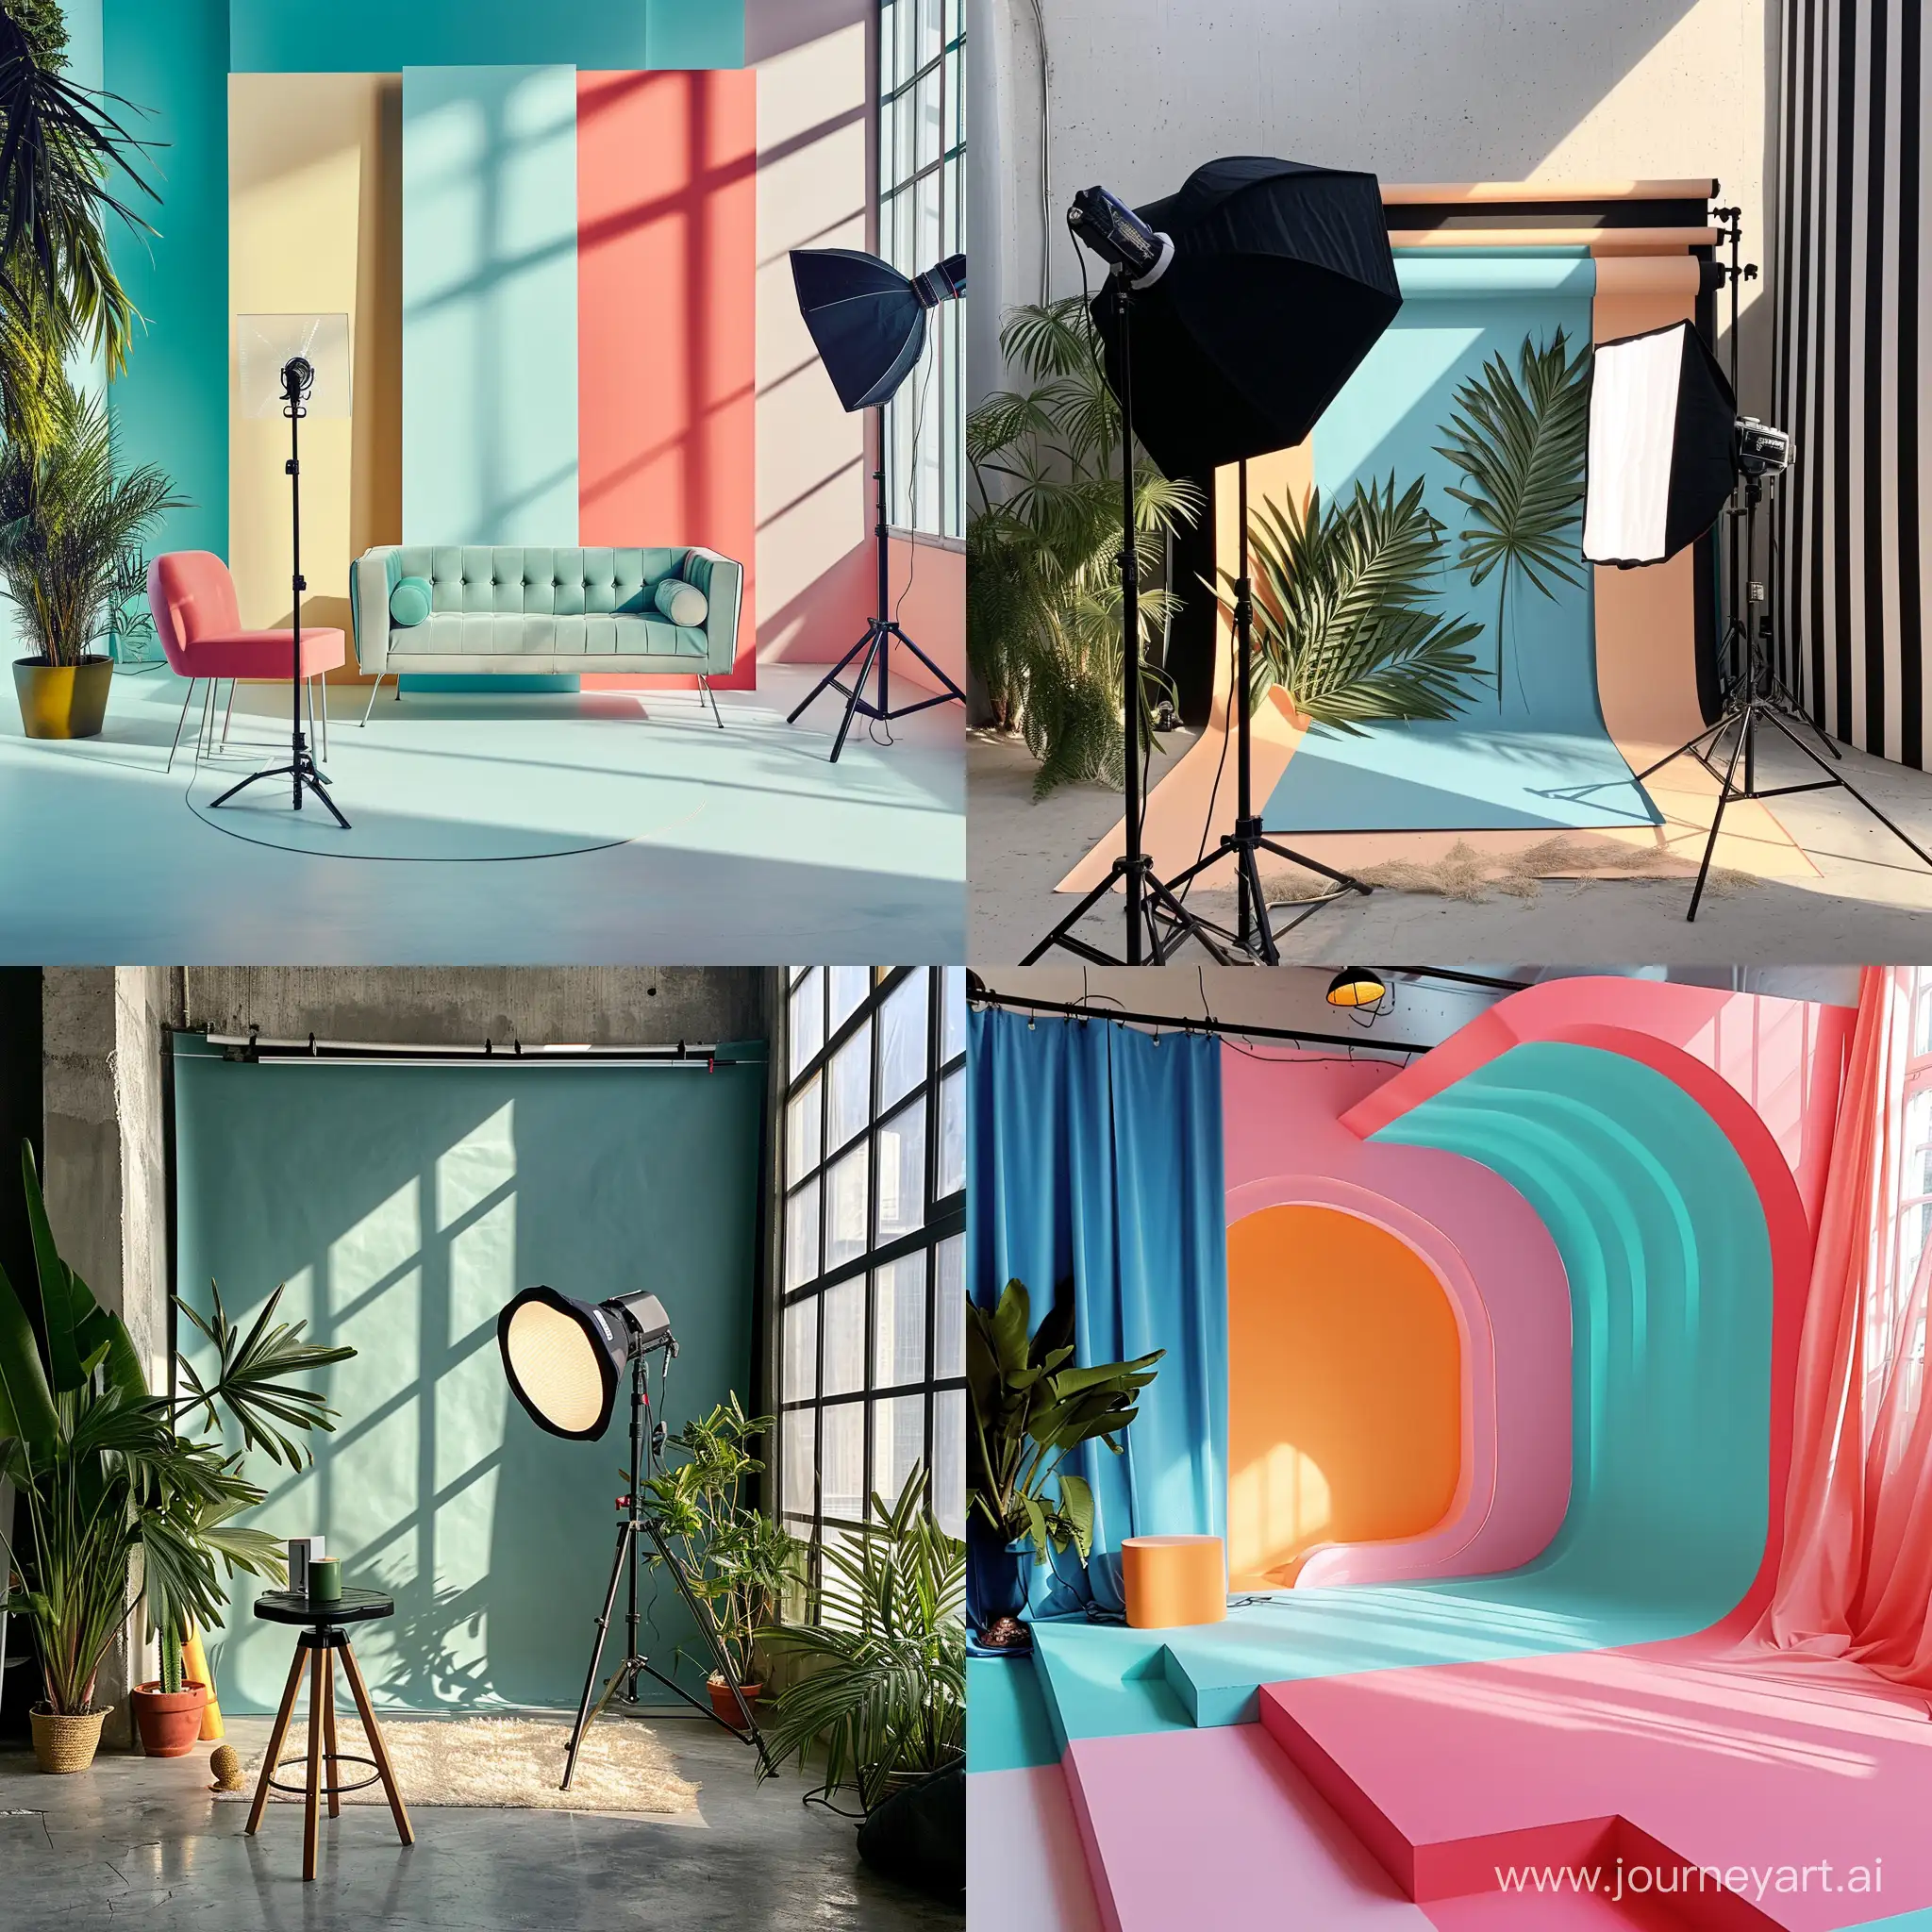 Minimalistic-TV1-Product-Photography-in-InstagramInspired-Studio-Setup